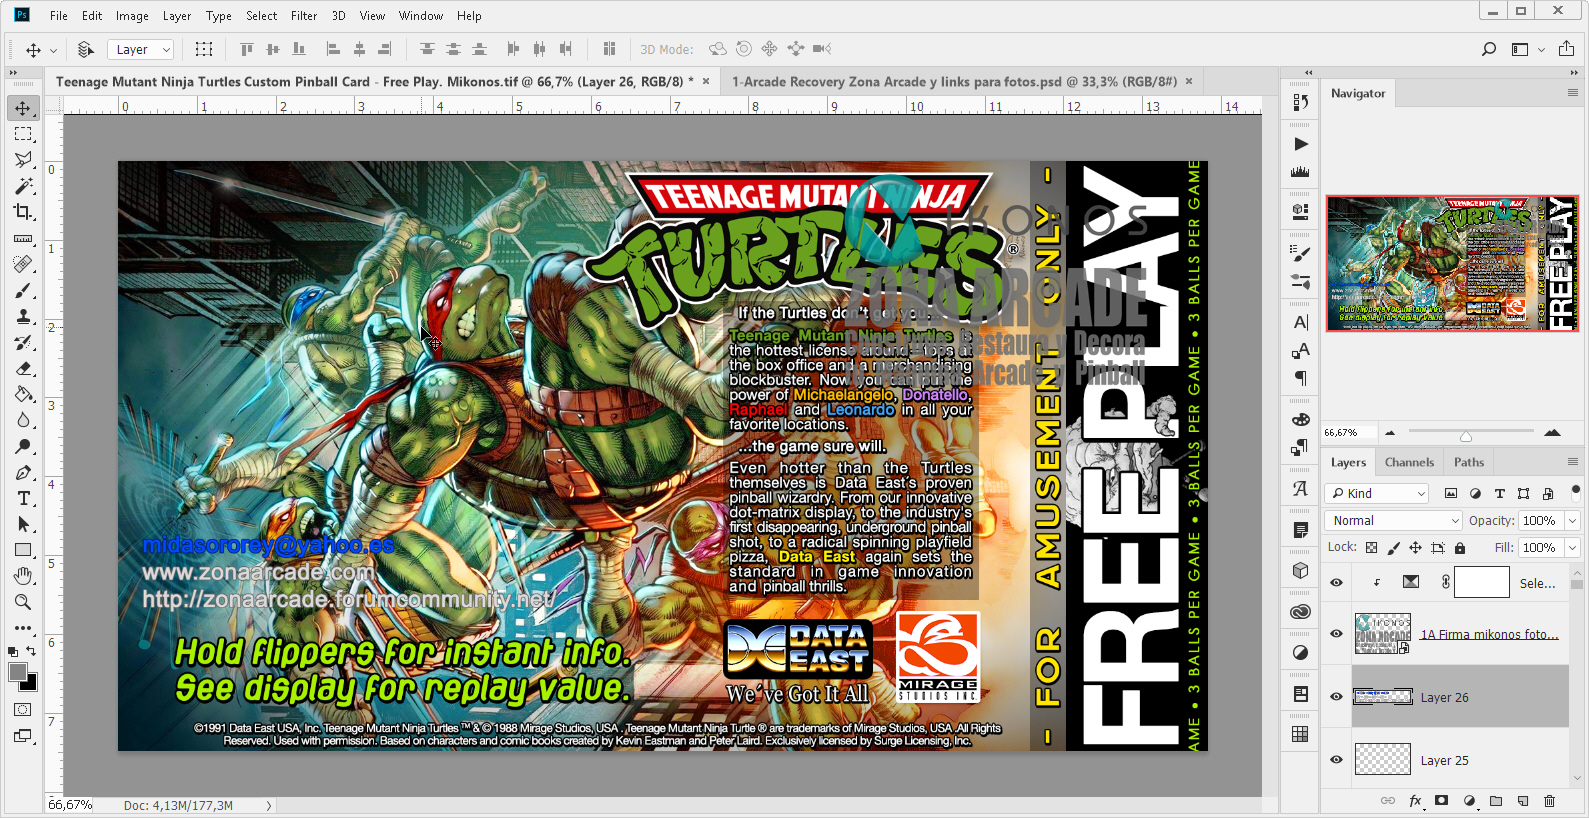 Teenage-Mutant-Ninja-Turtles-Pinball-Card-Customized-Free-Play2-Mikonos1